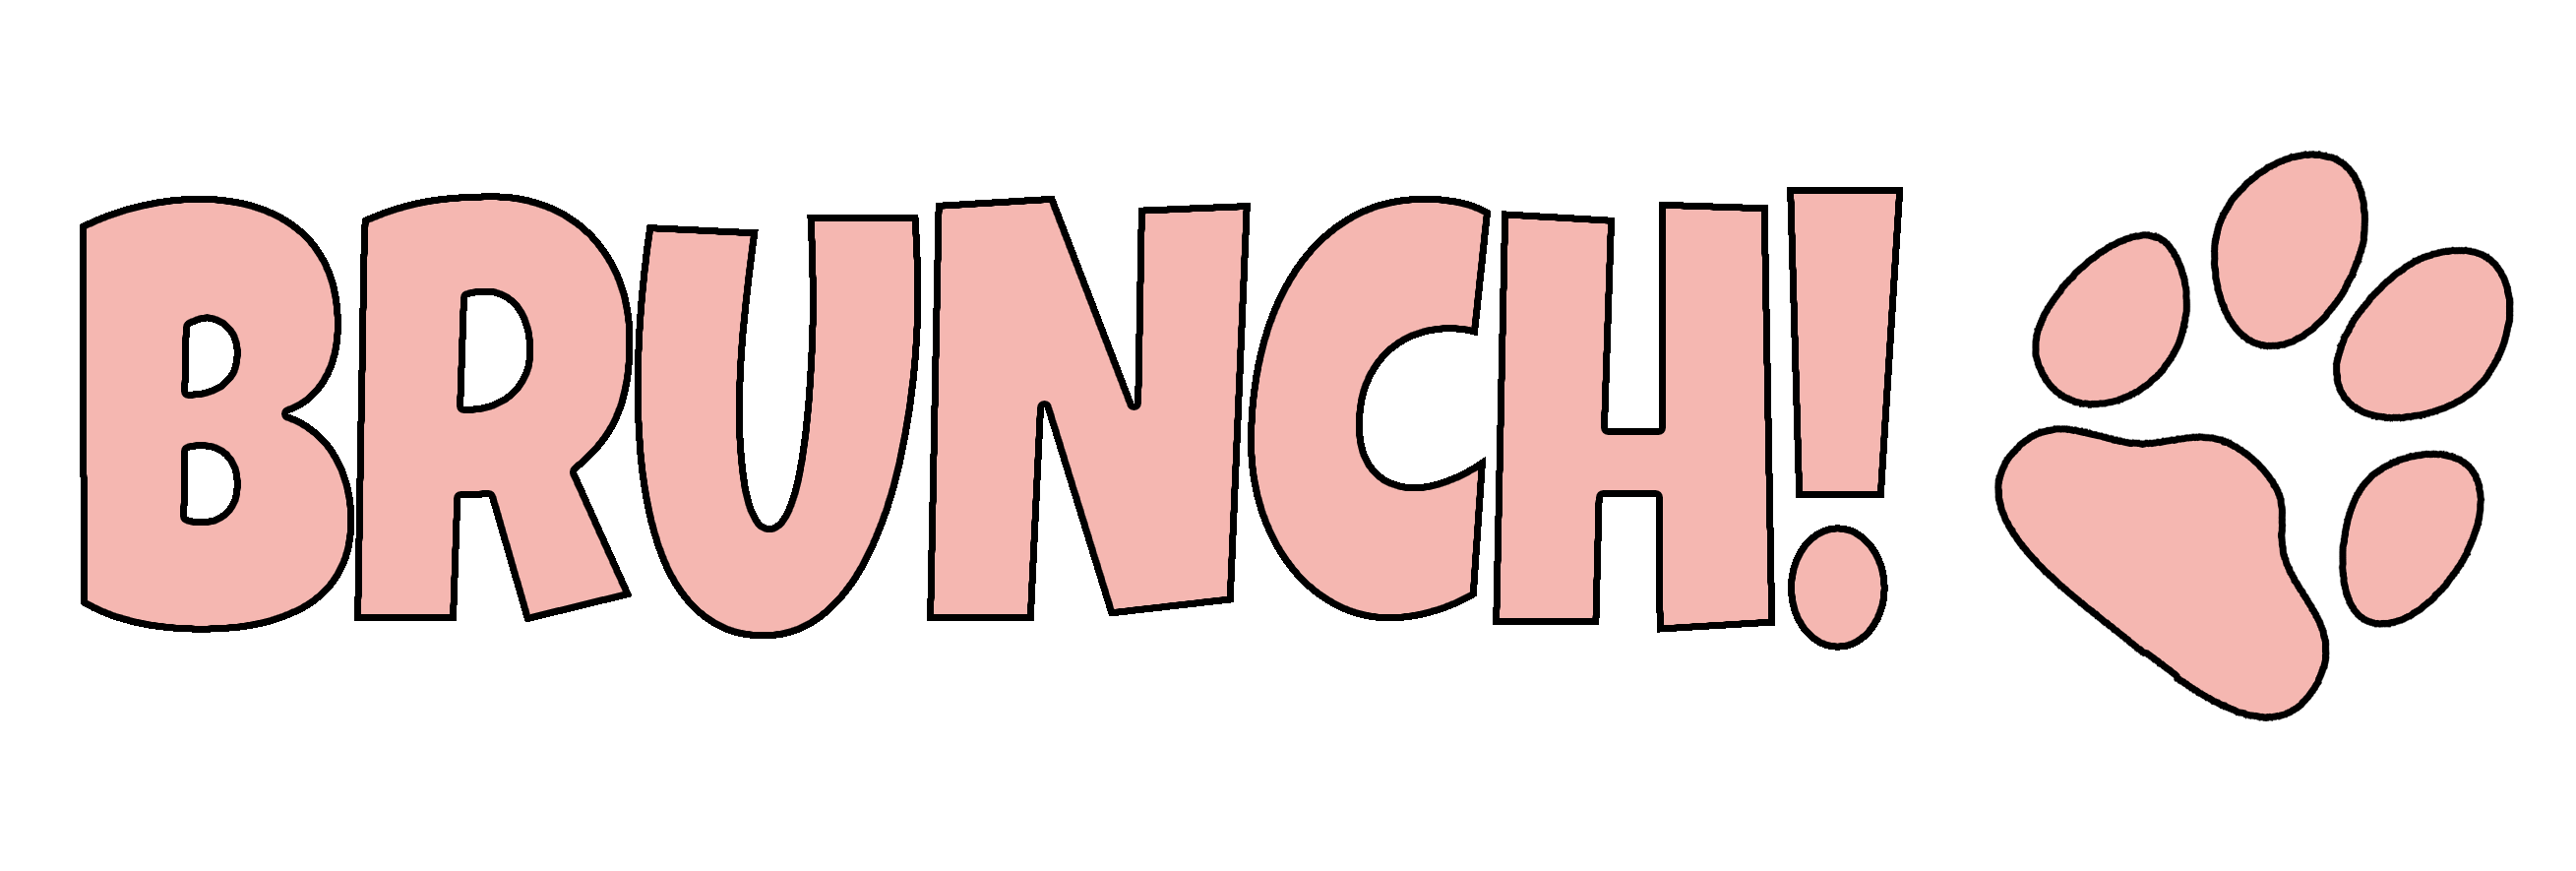 brunch-logo